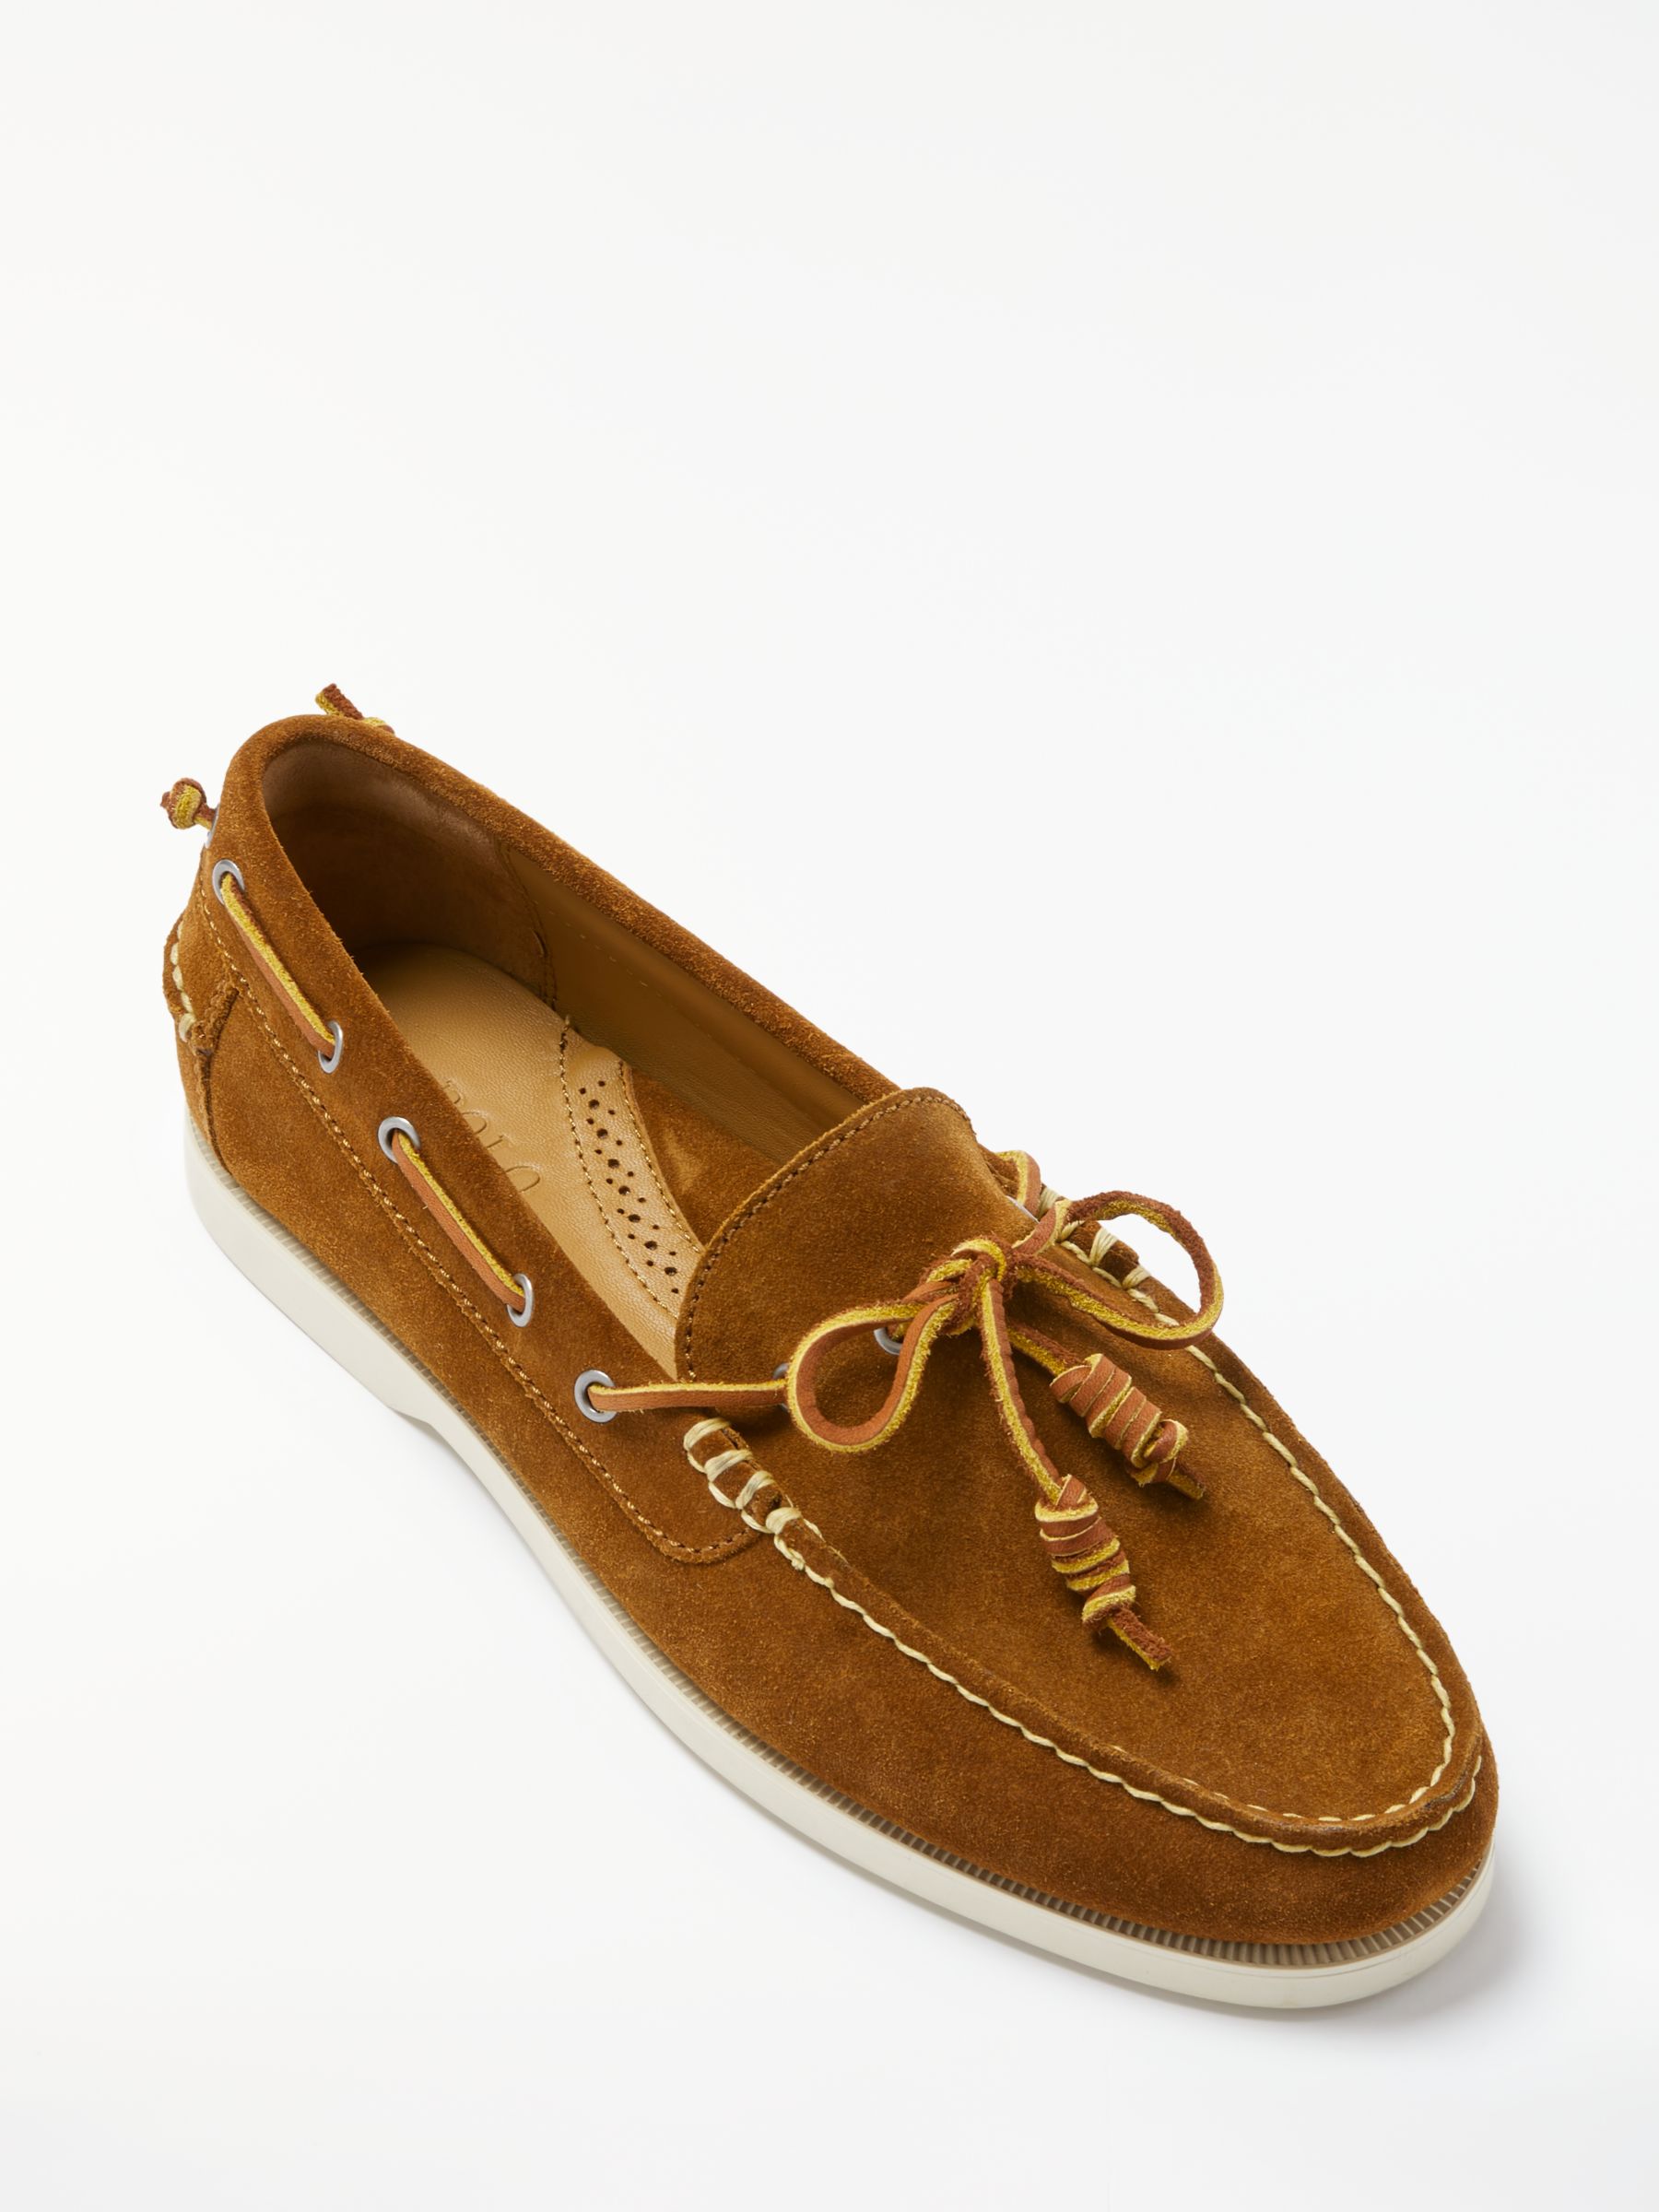 Polo Ralph Lauren Millard Suede Boat Shoes